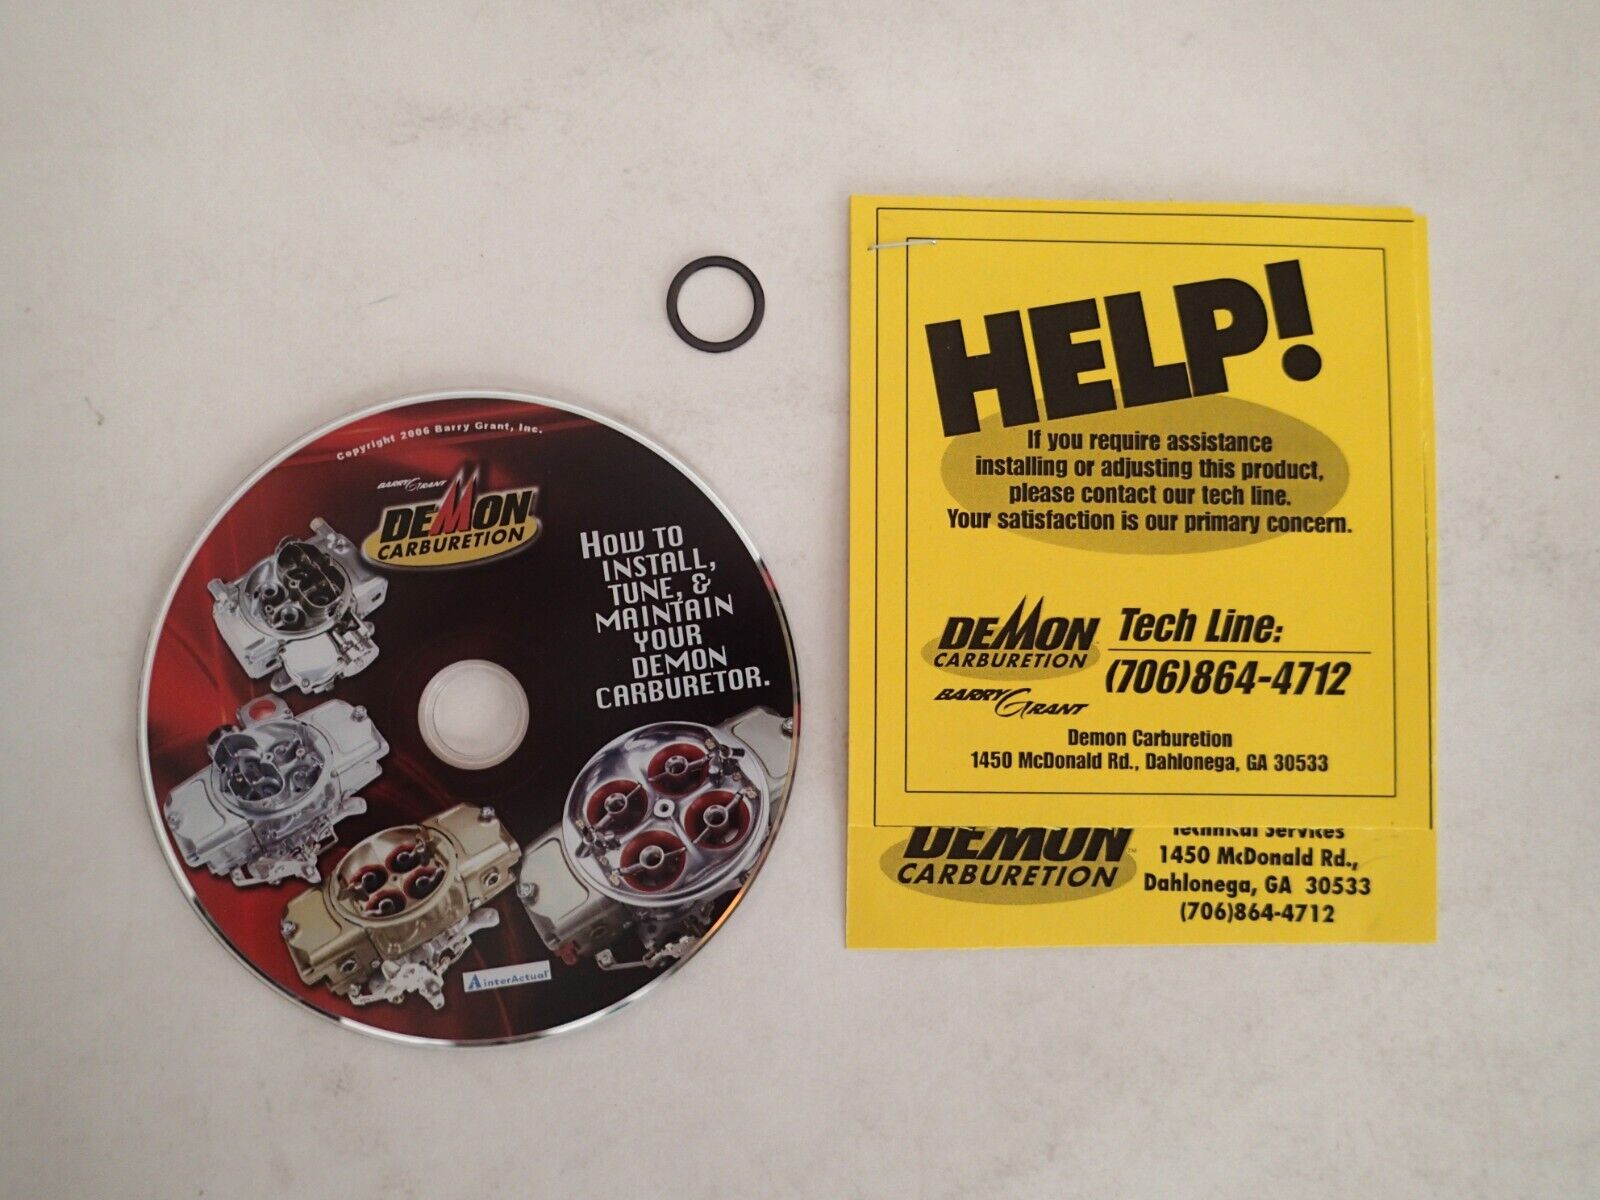 DEMON CARBURETION 2006 DVD, Barry Grant, Automobile Car Engine Parts Collectible